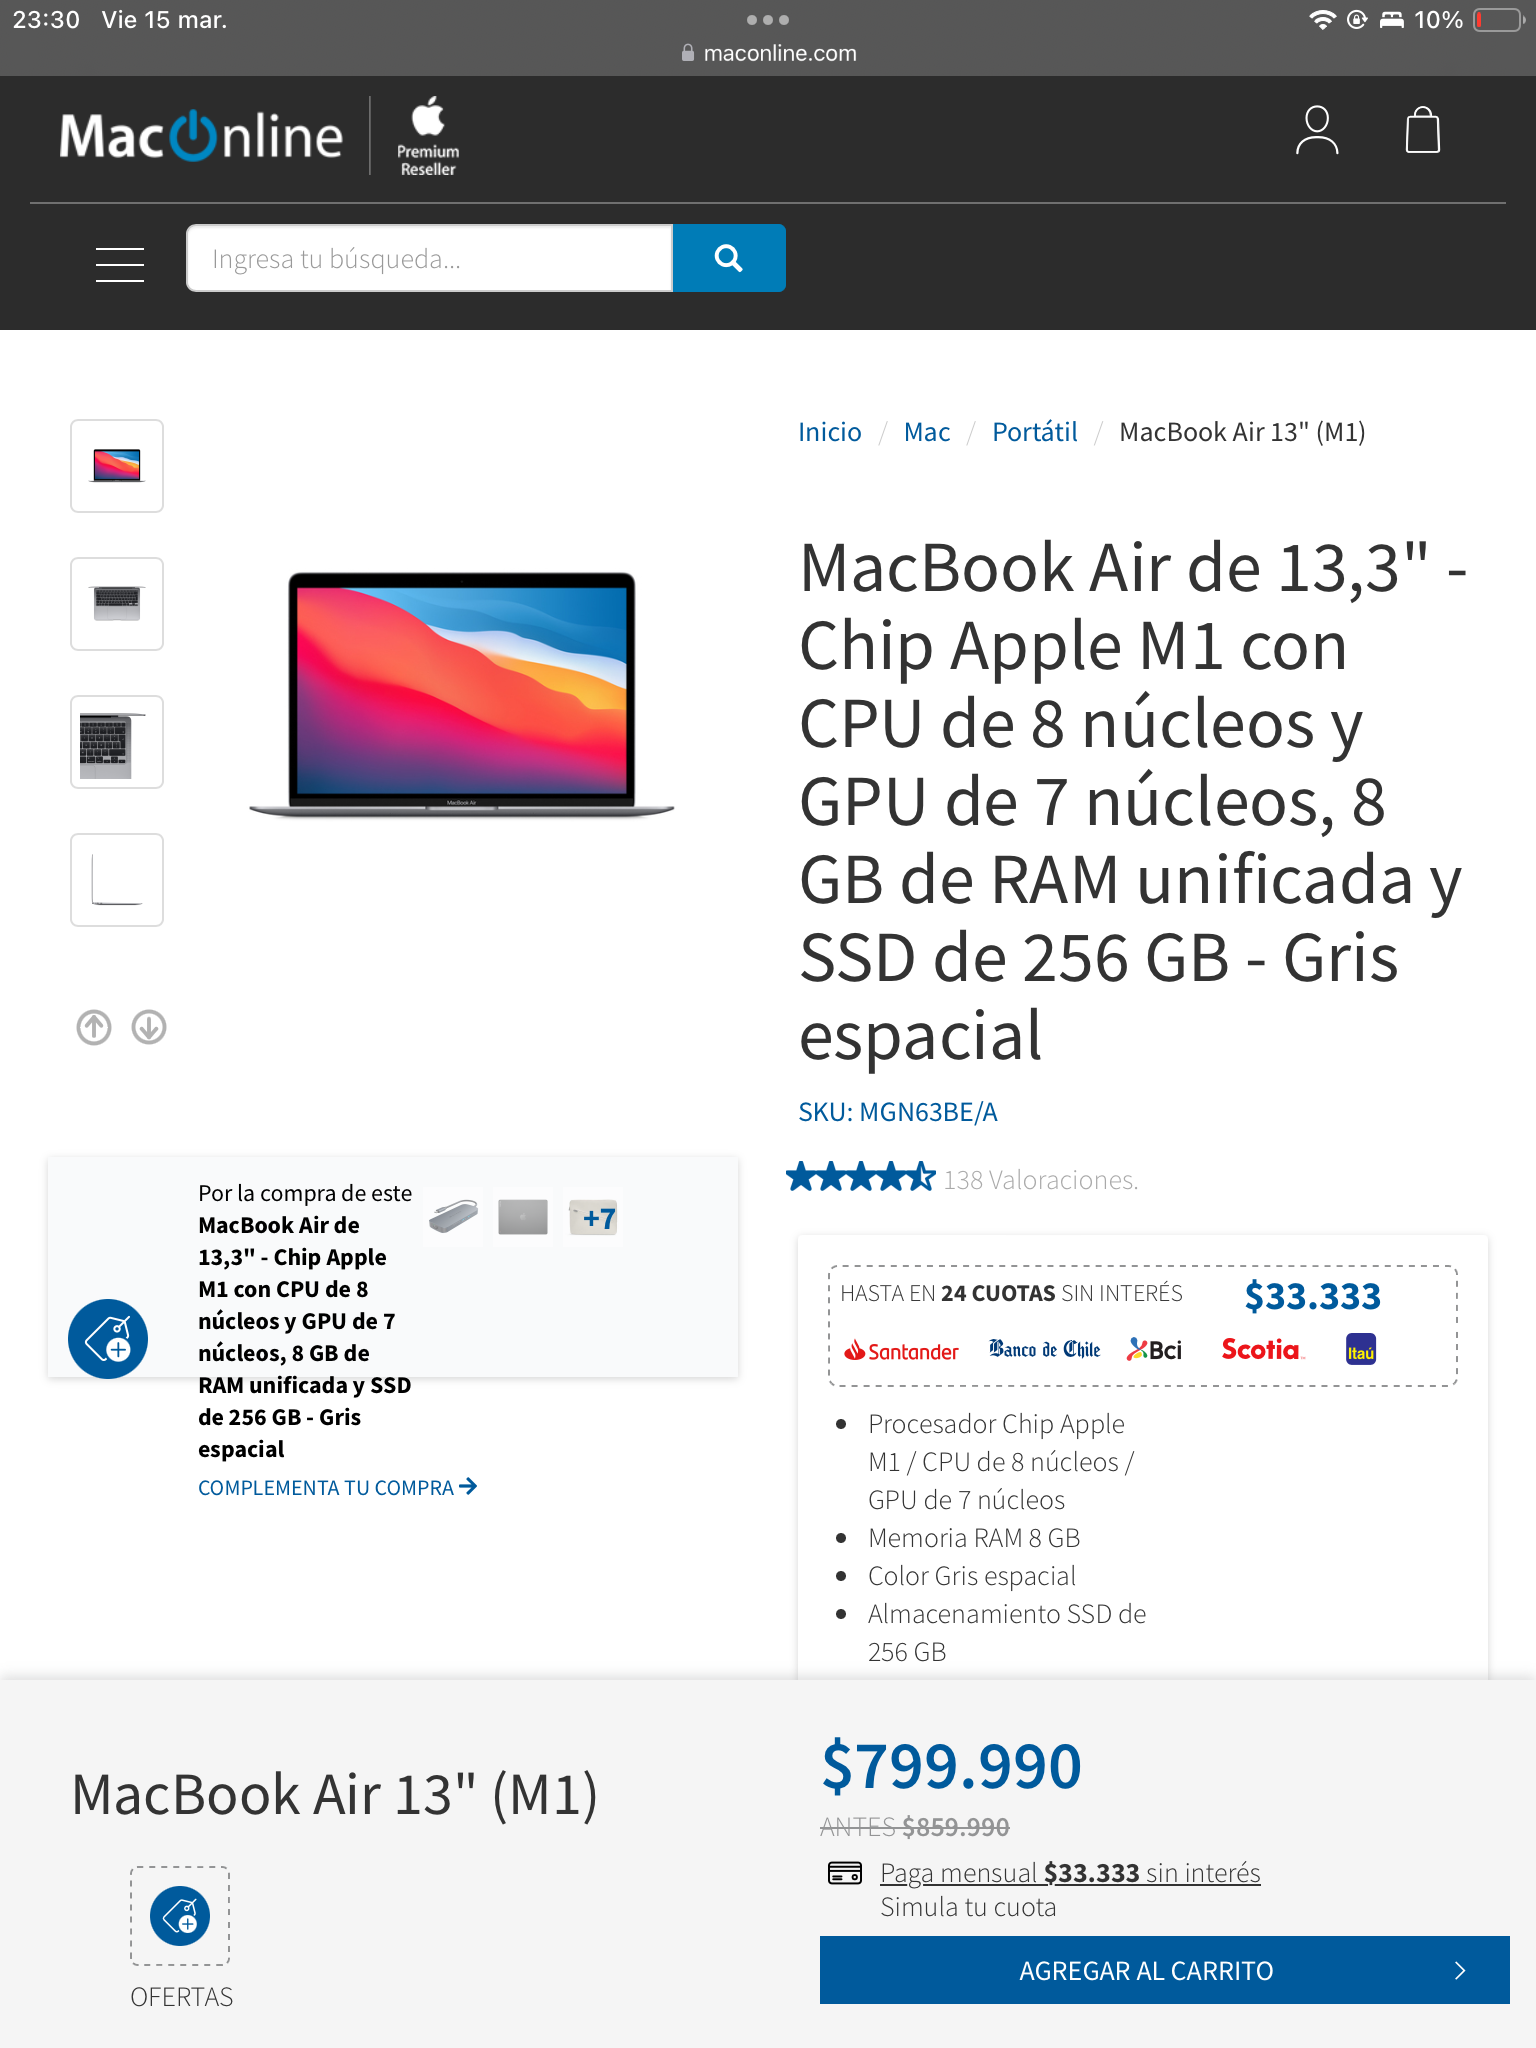 M1 MacBook Air for sale in MacOnline (price in CLP)